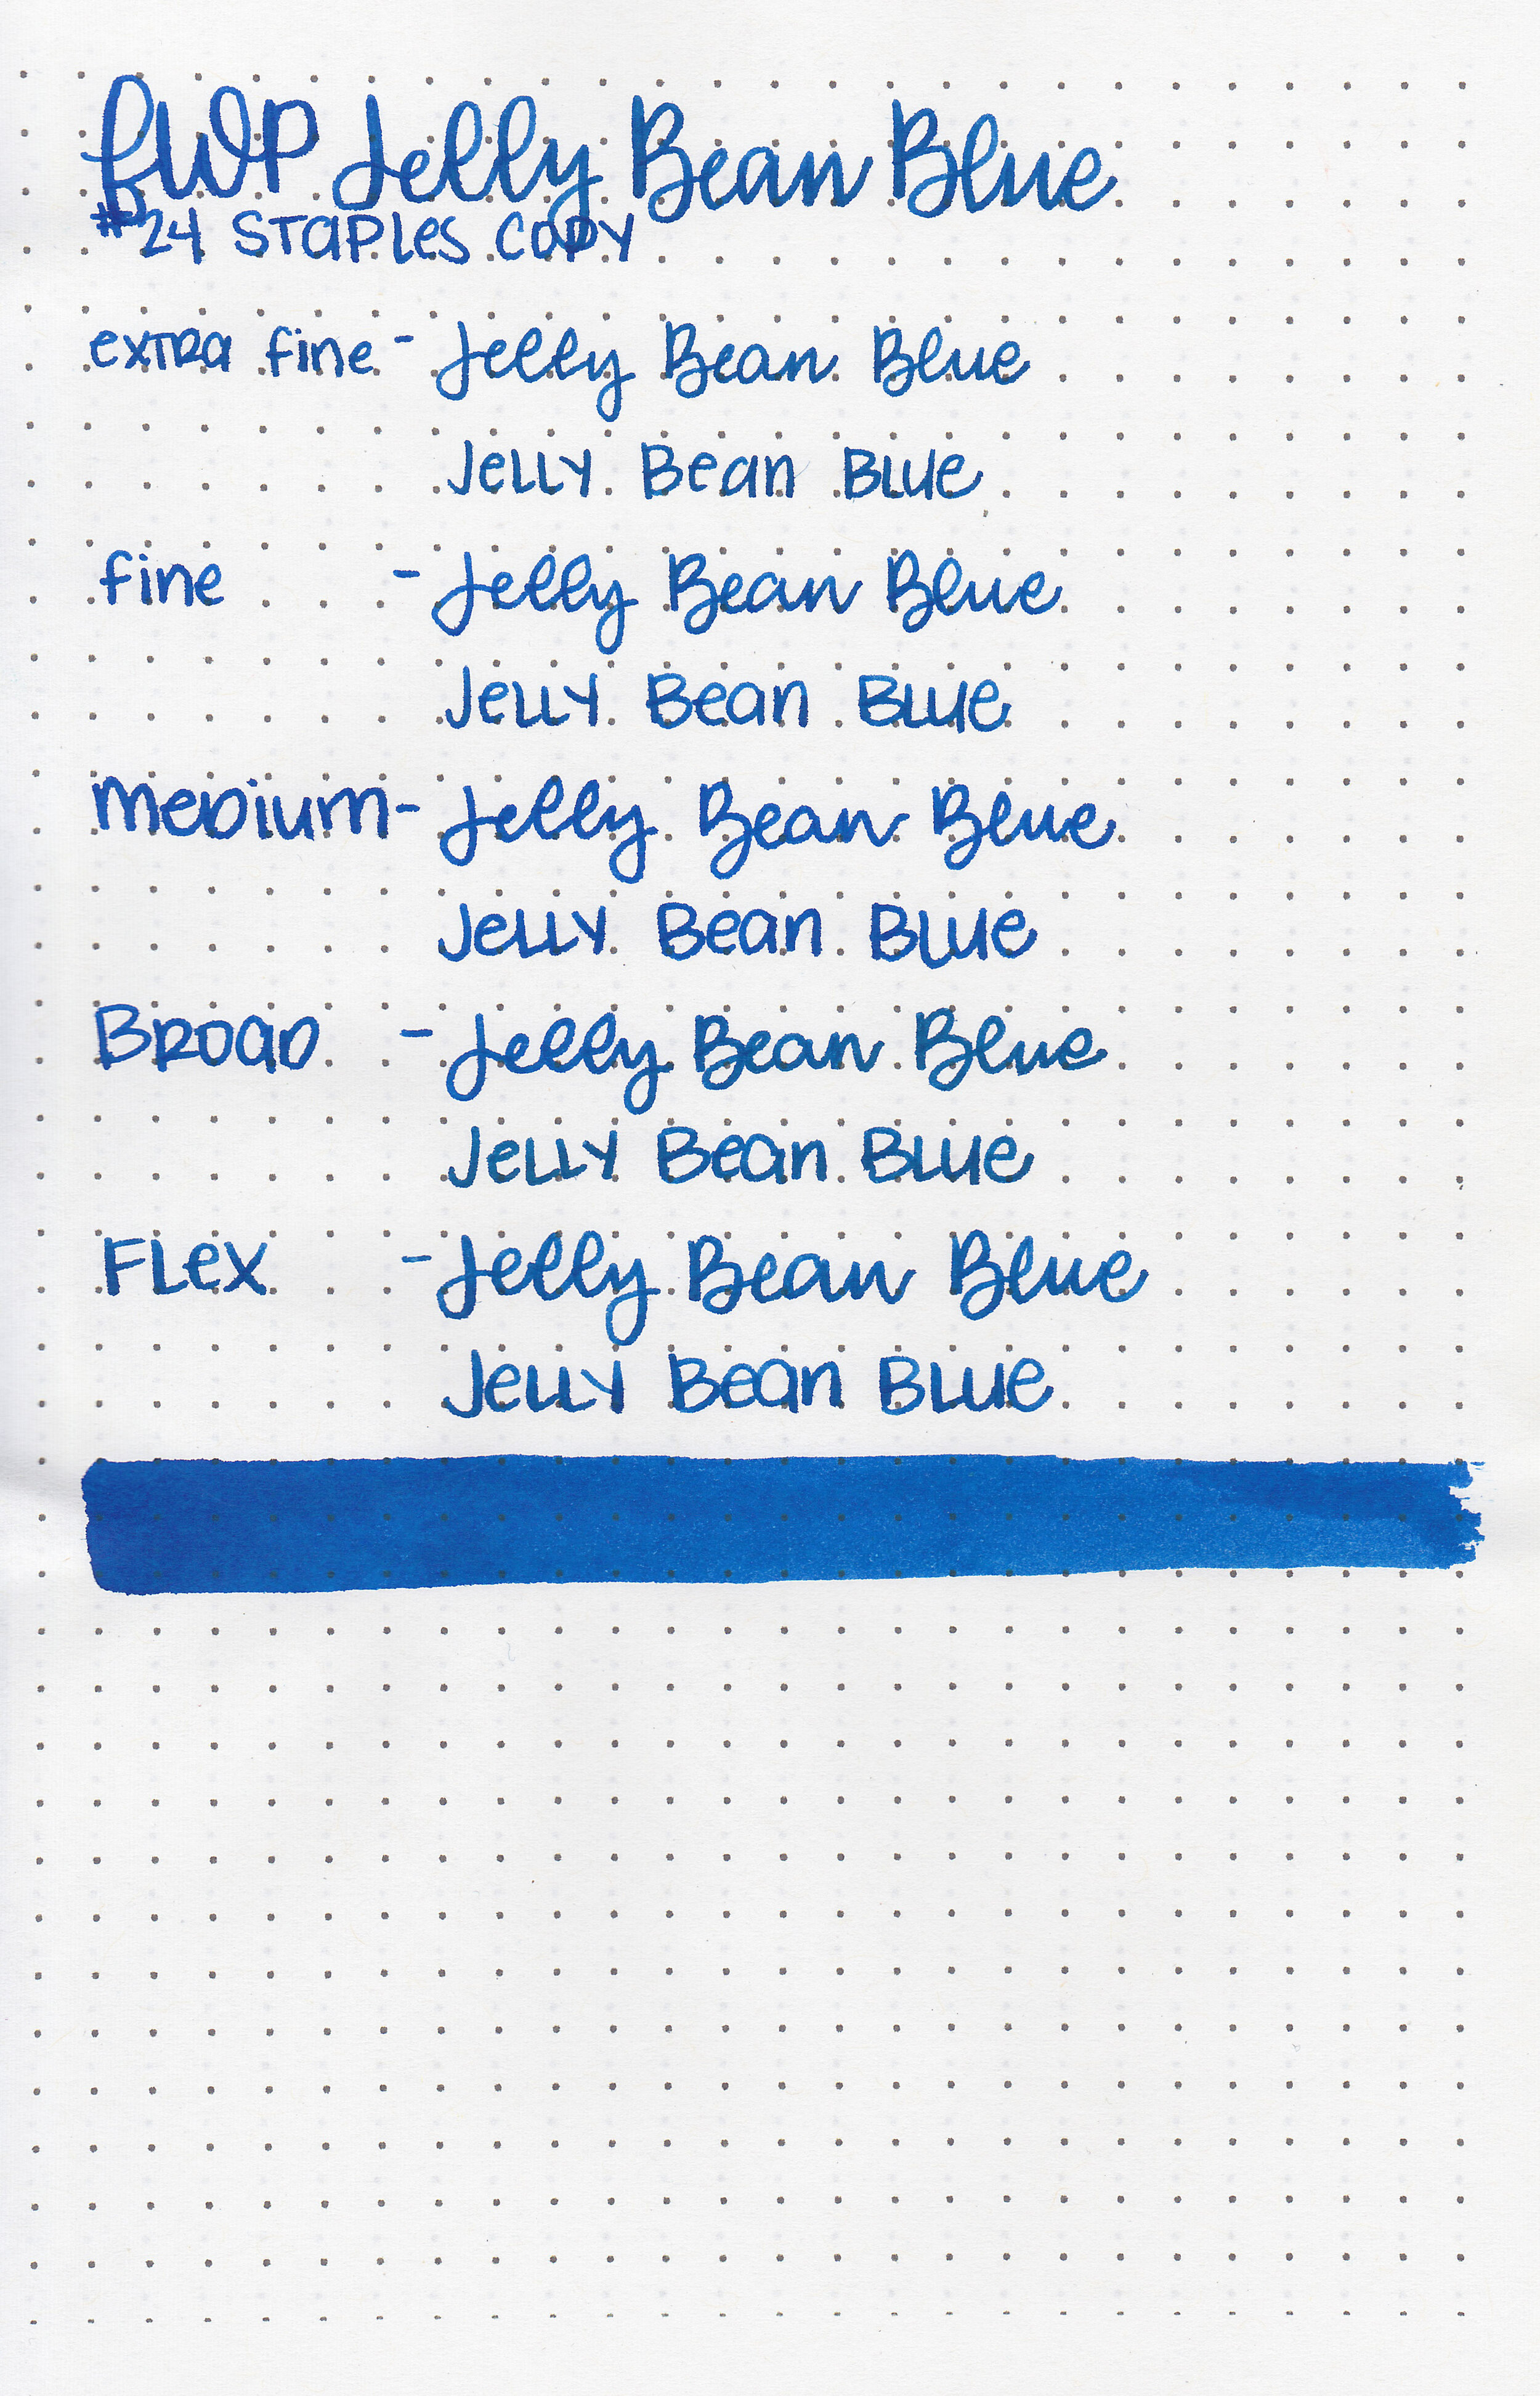 fwp-jelly-bean-blue-11.jpg